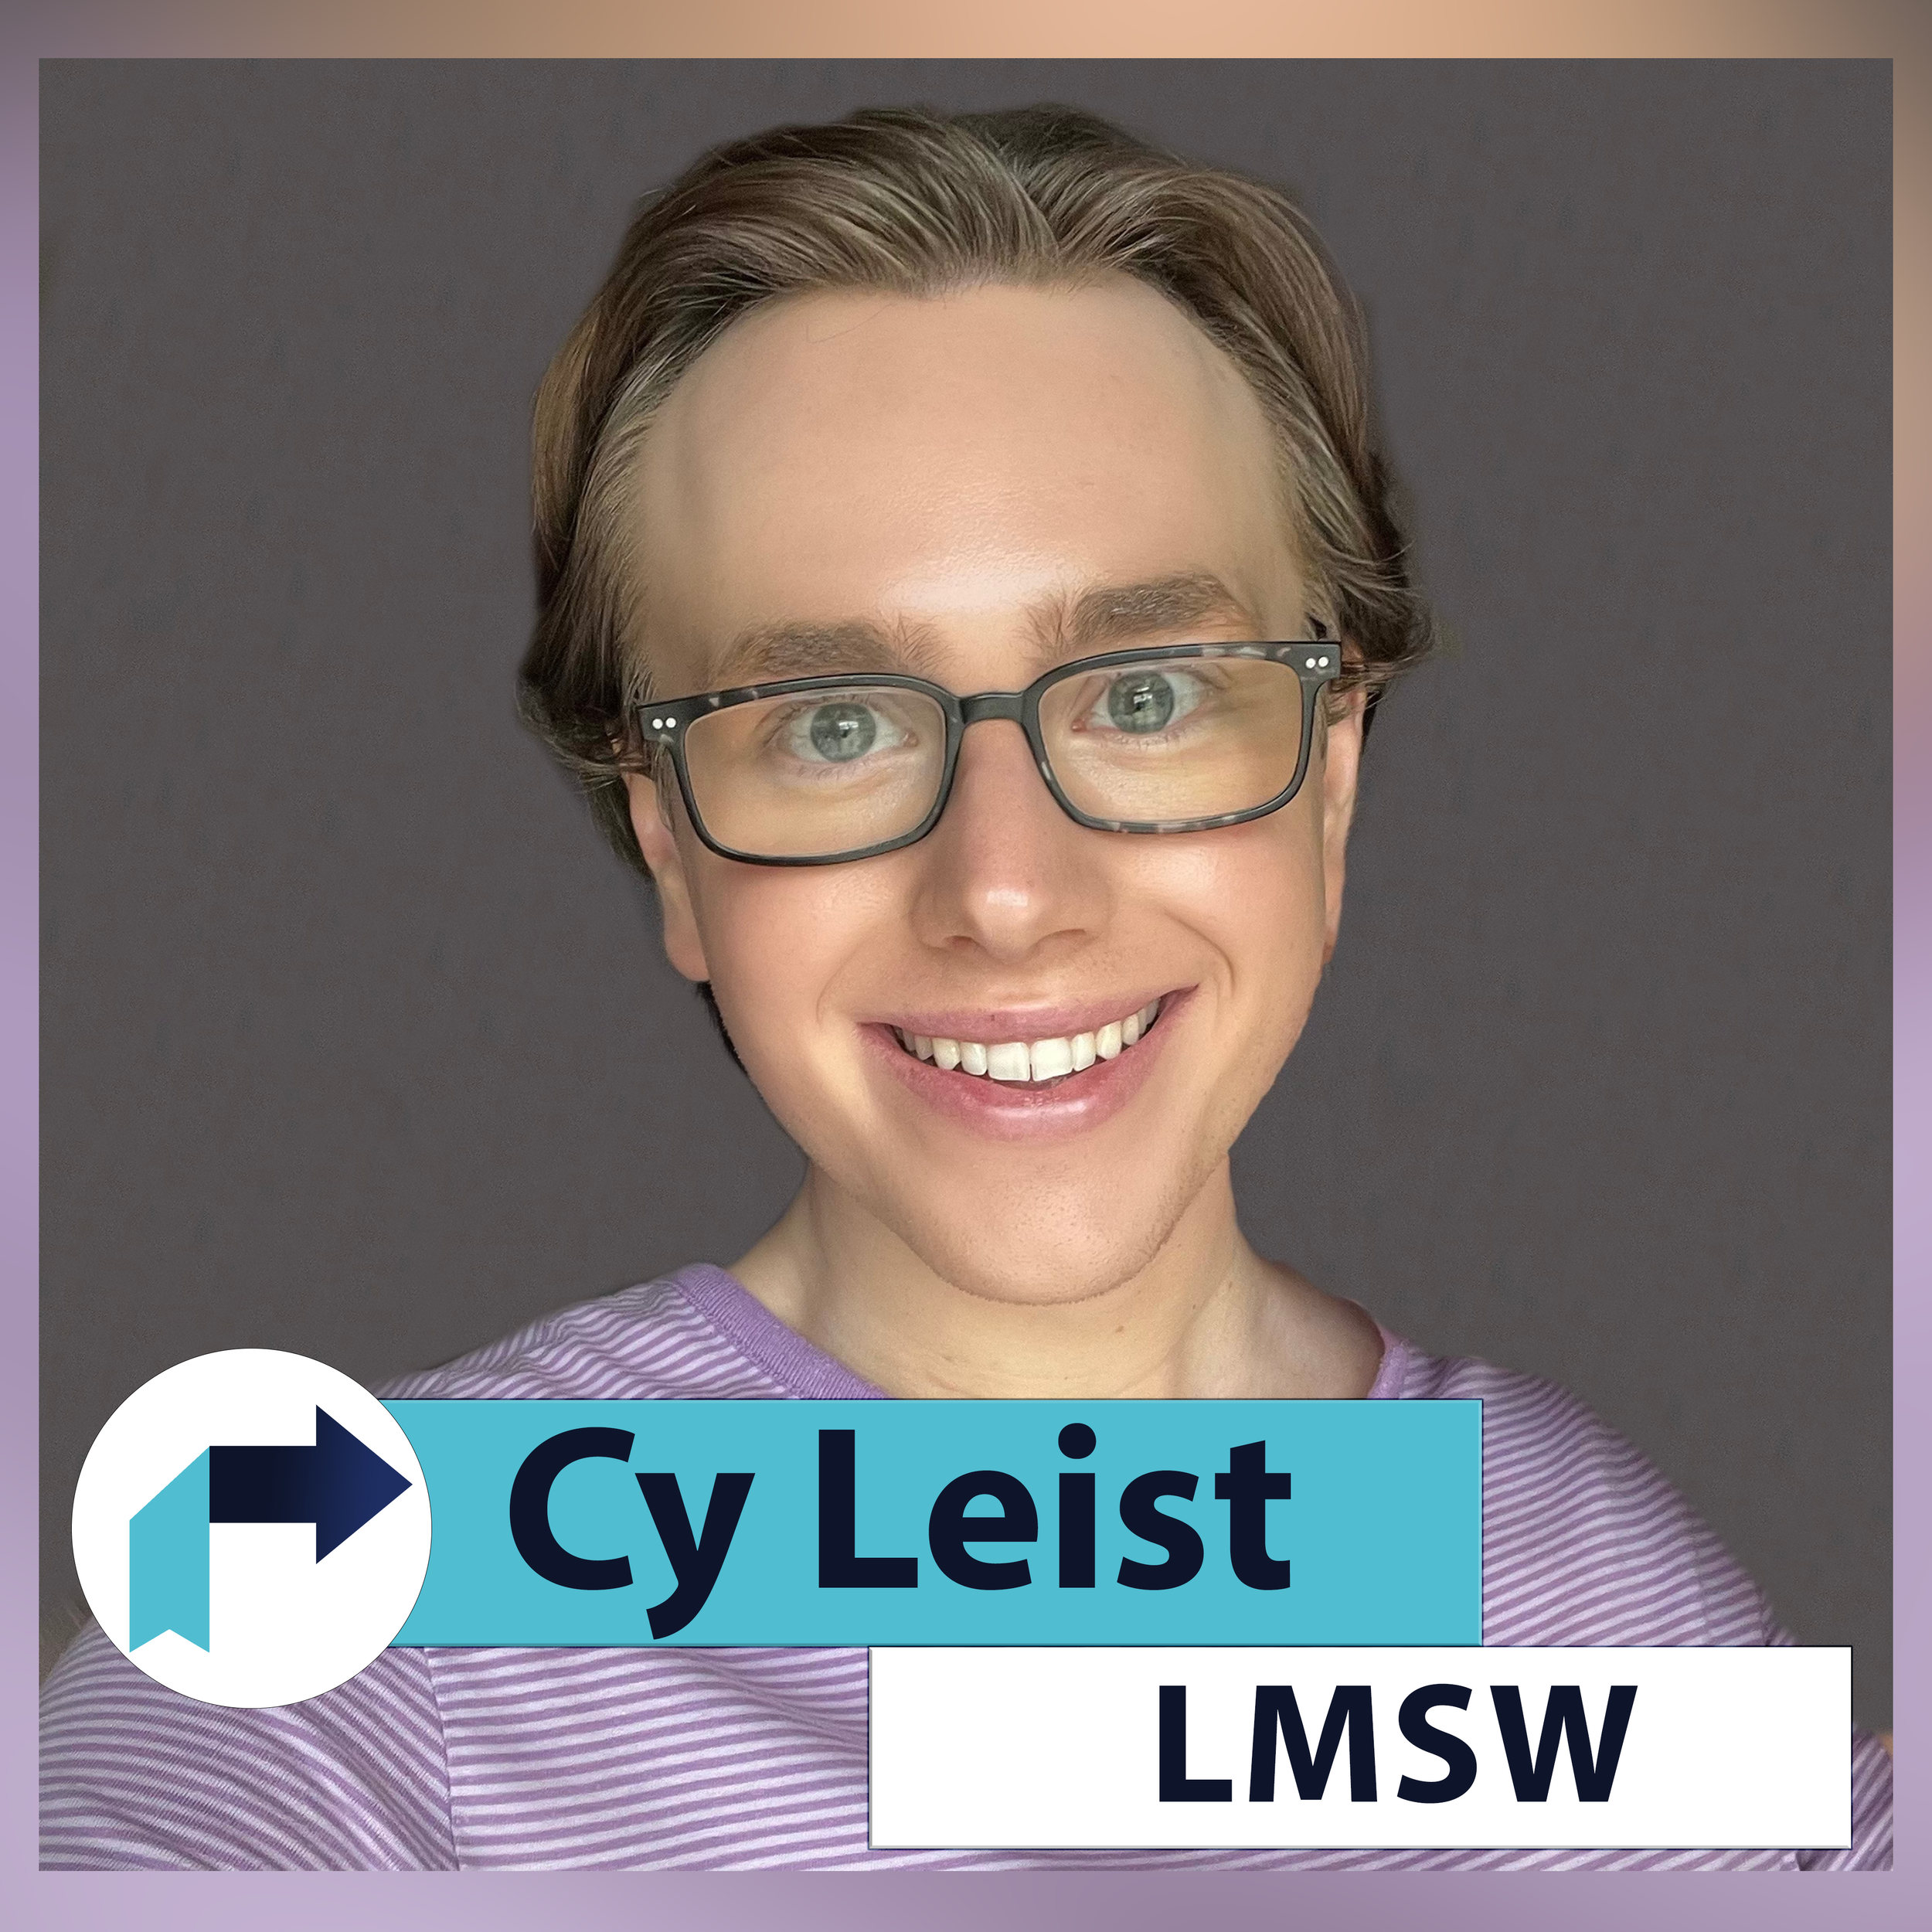 Cy Leist, LMSW